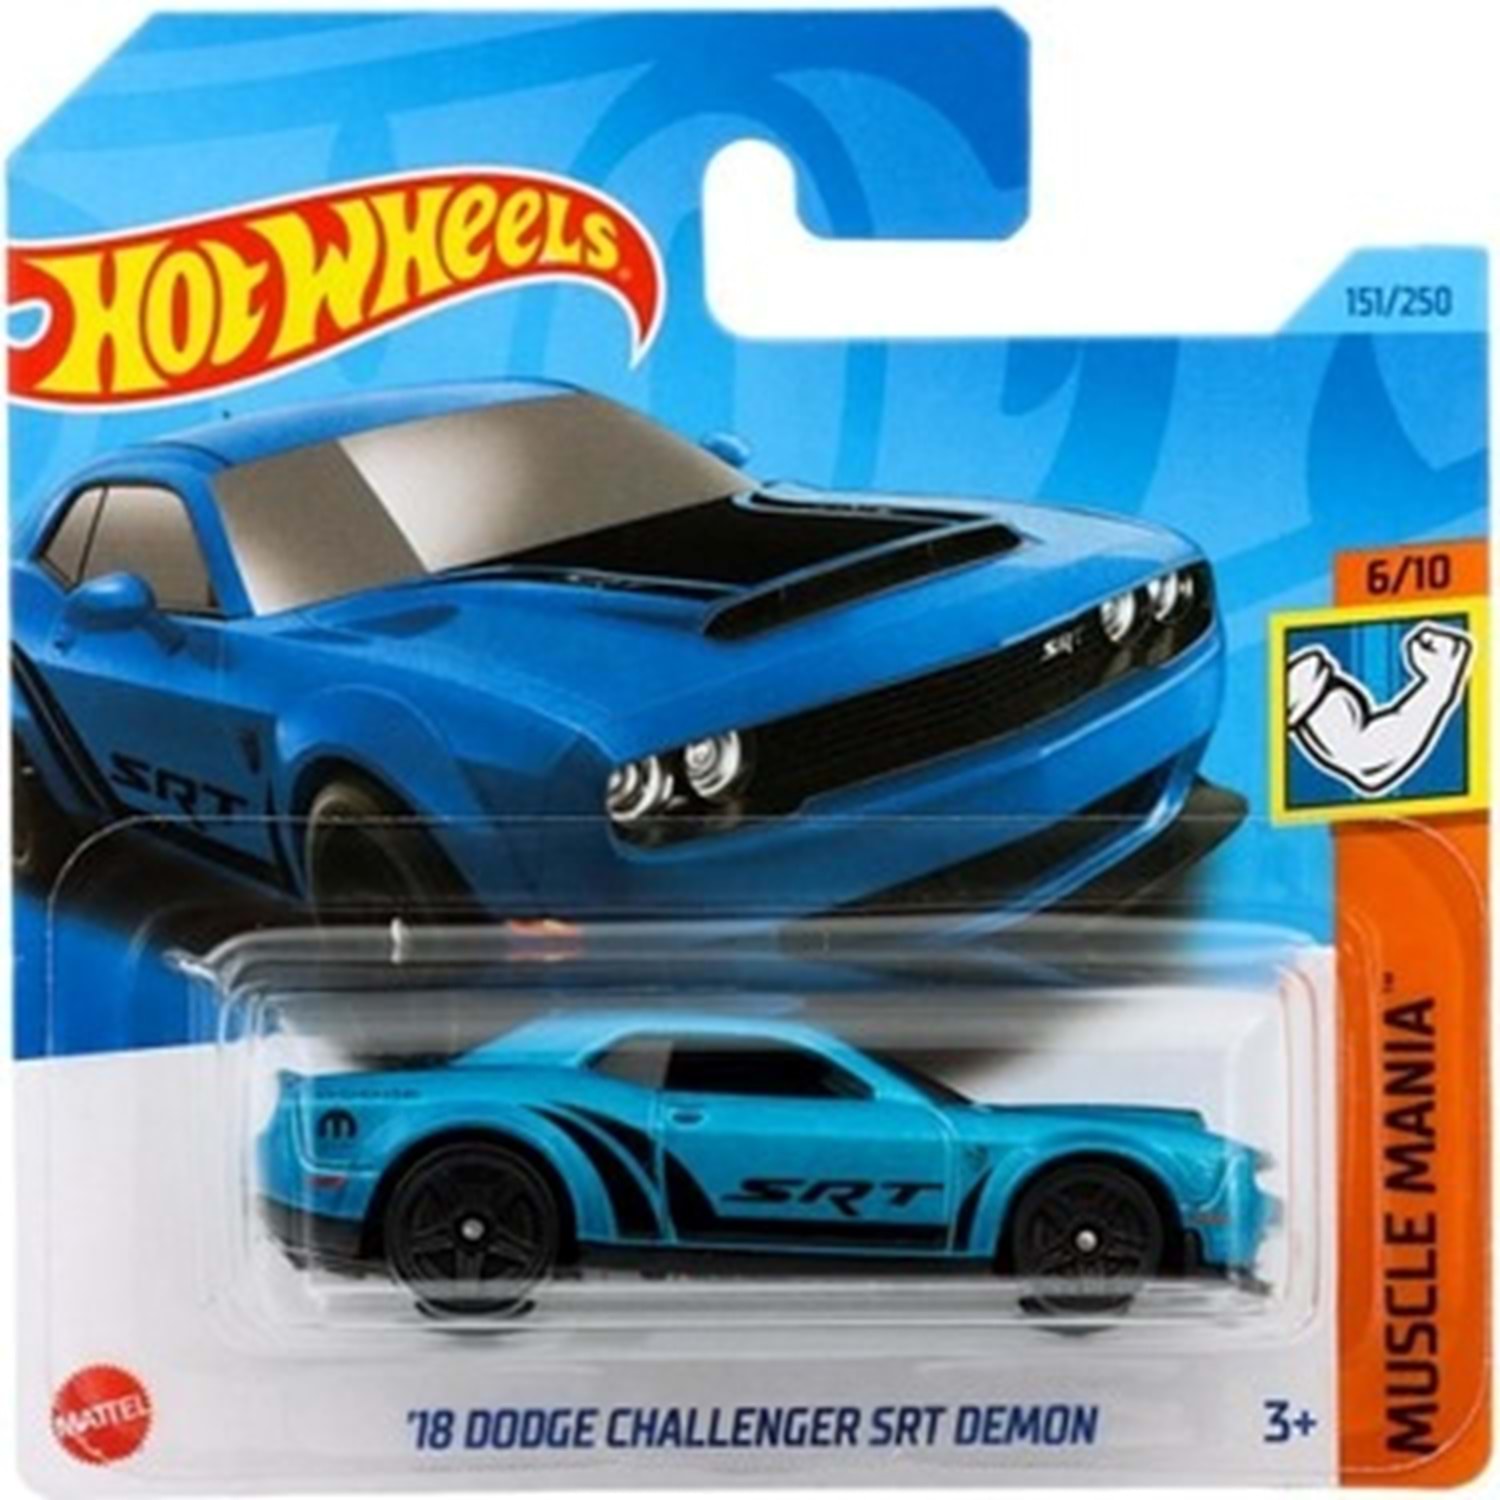 18 Dodge Challenger Srt Demon Hot Wheels HKJ54